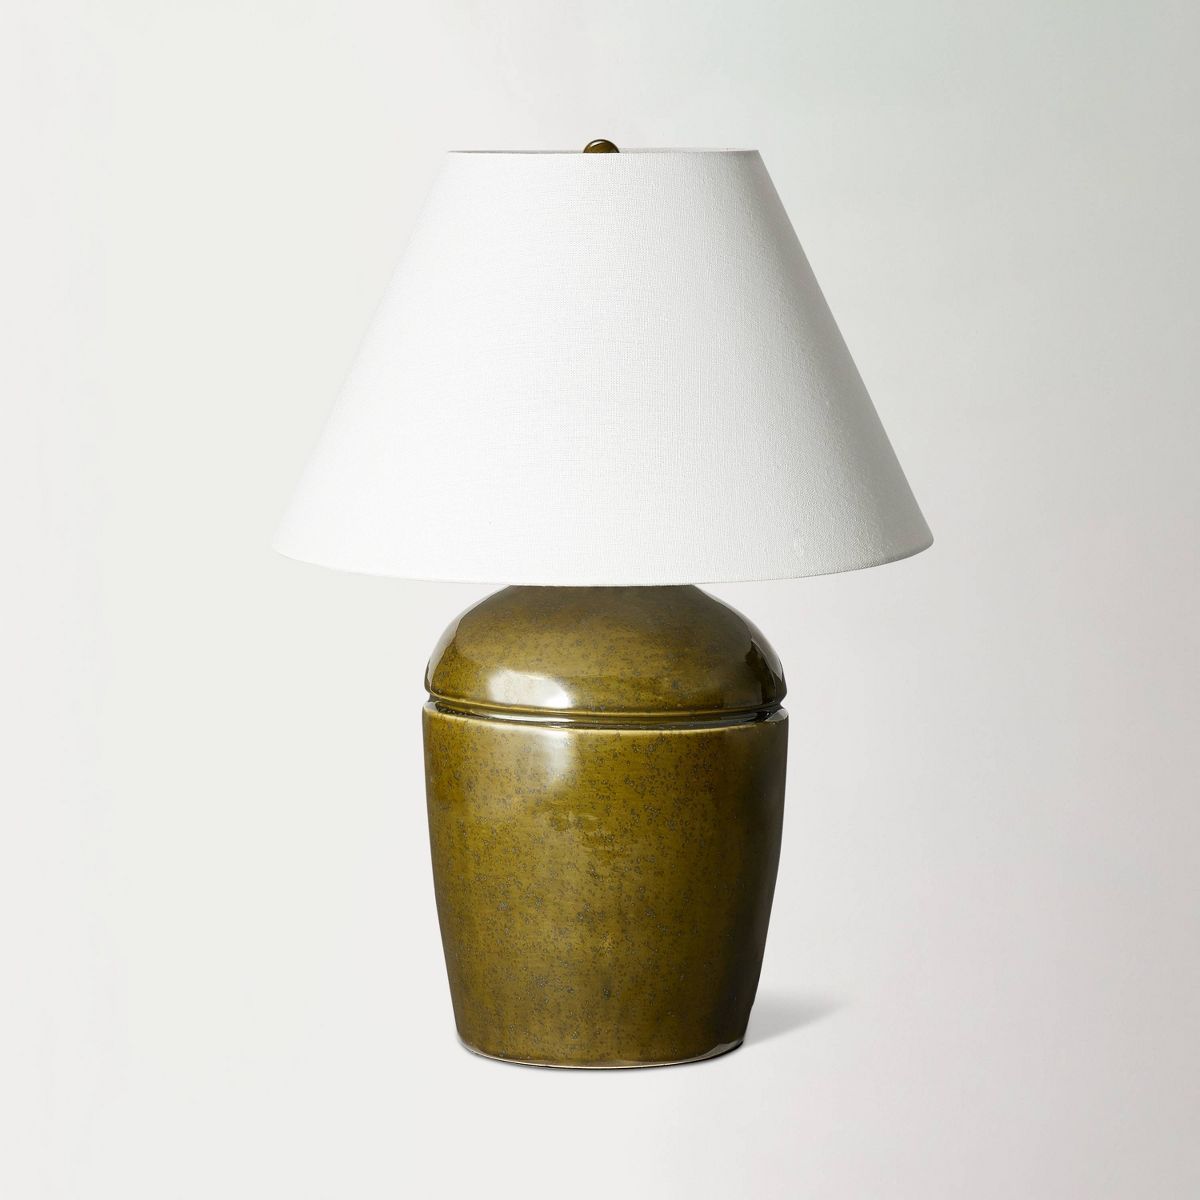 Medium High Gloss Ceramic Table Lamp Green - Threshold™ designed with Studio McGee | Target